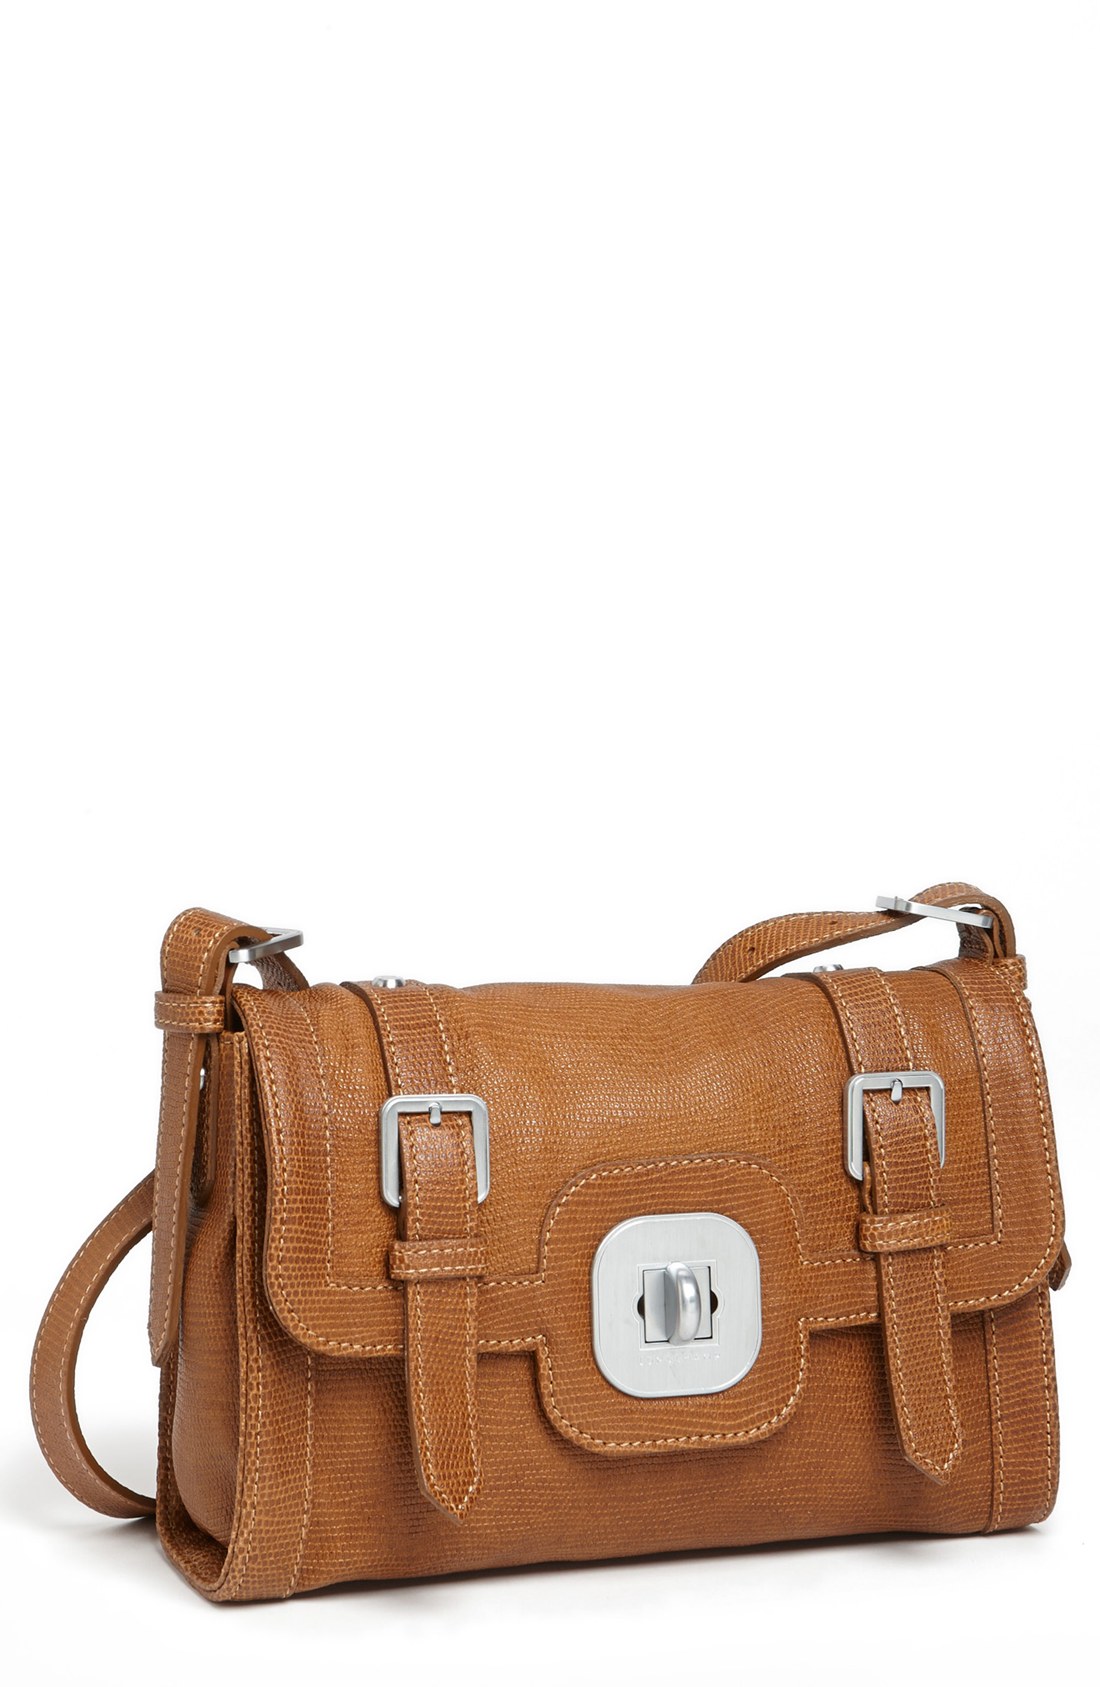 Longchamp Sport Leather Crossbody Bag in Brown (Cognac) | Lyst